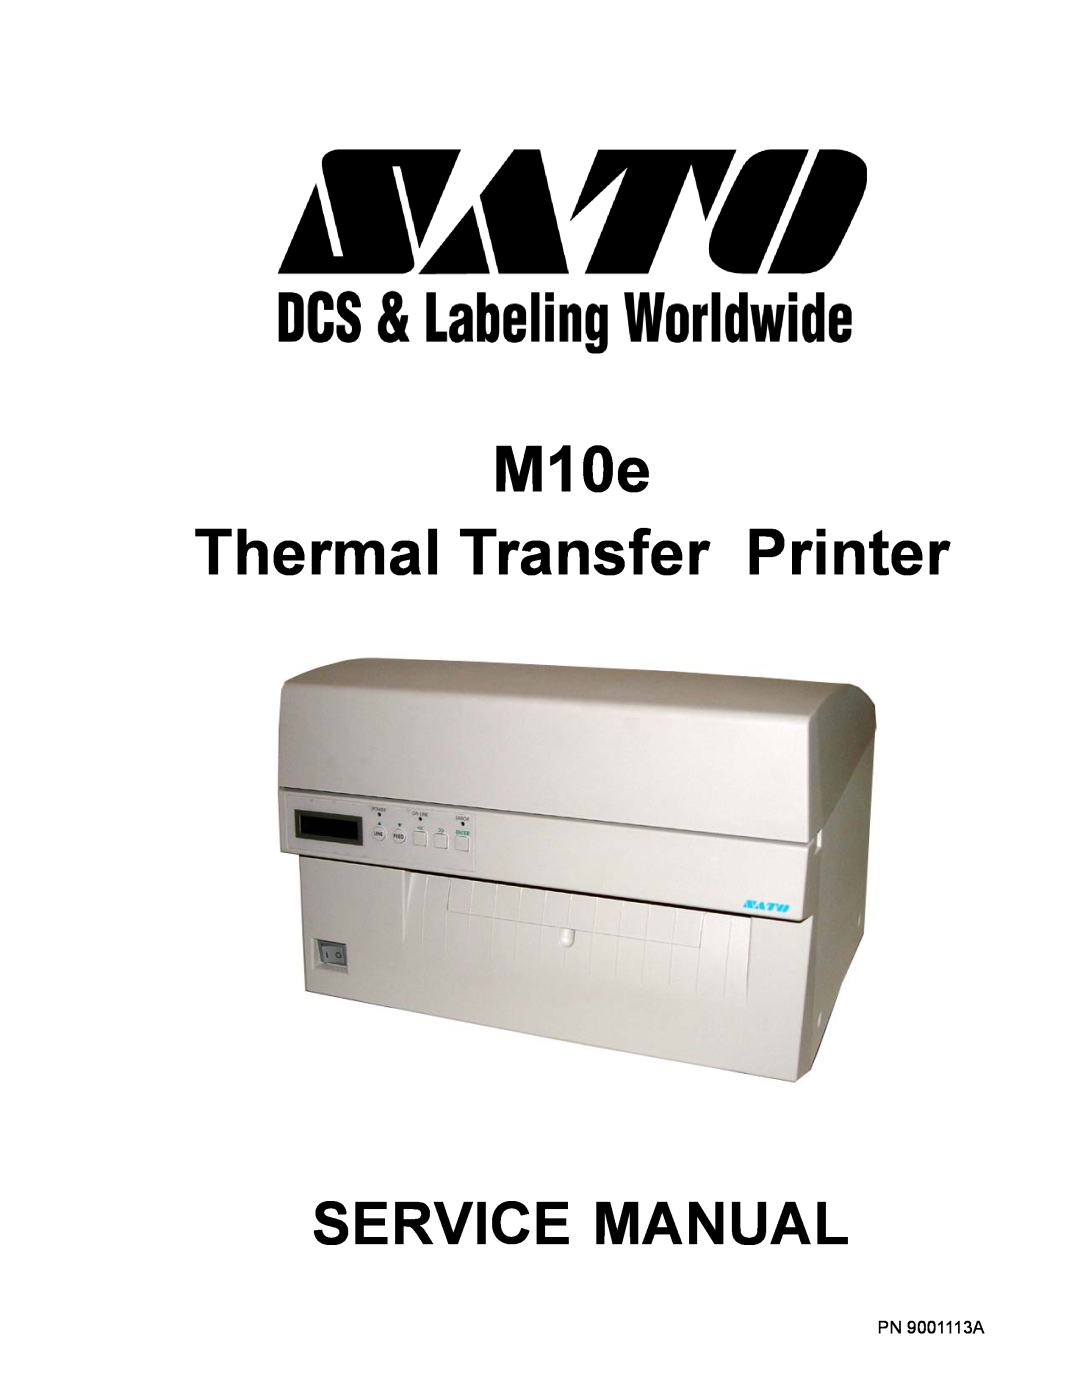 SATO service manual M10e Thermal Transfer Printer, Service Manual 